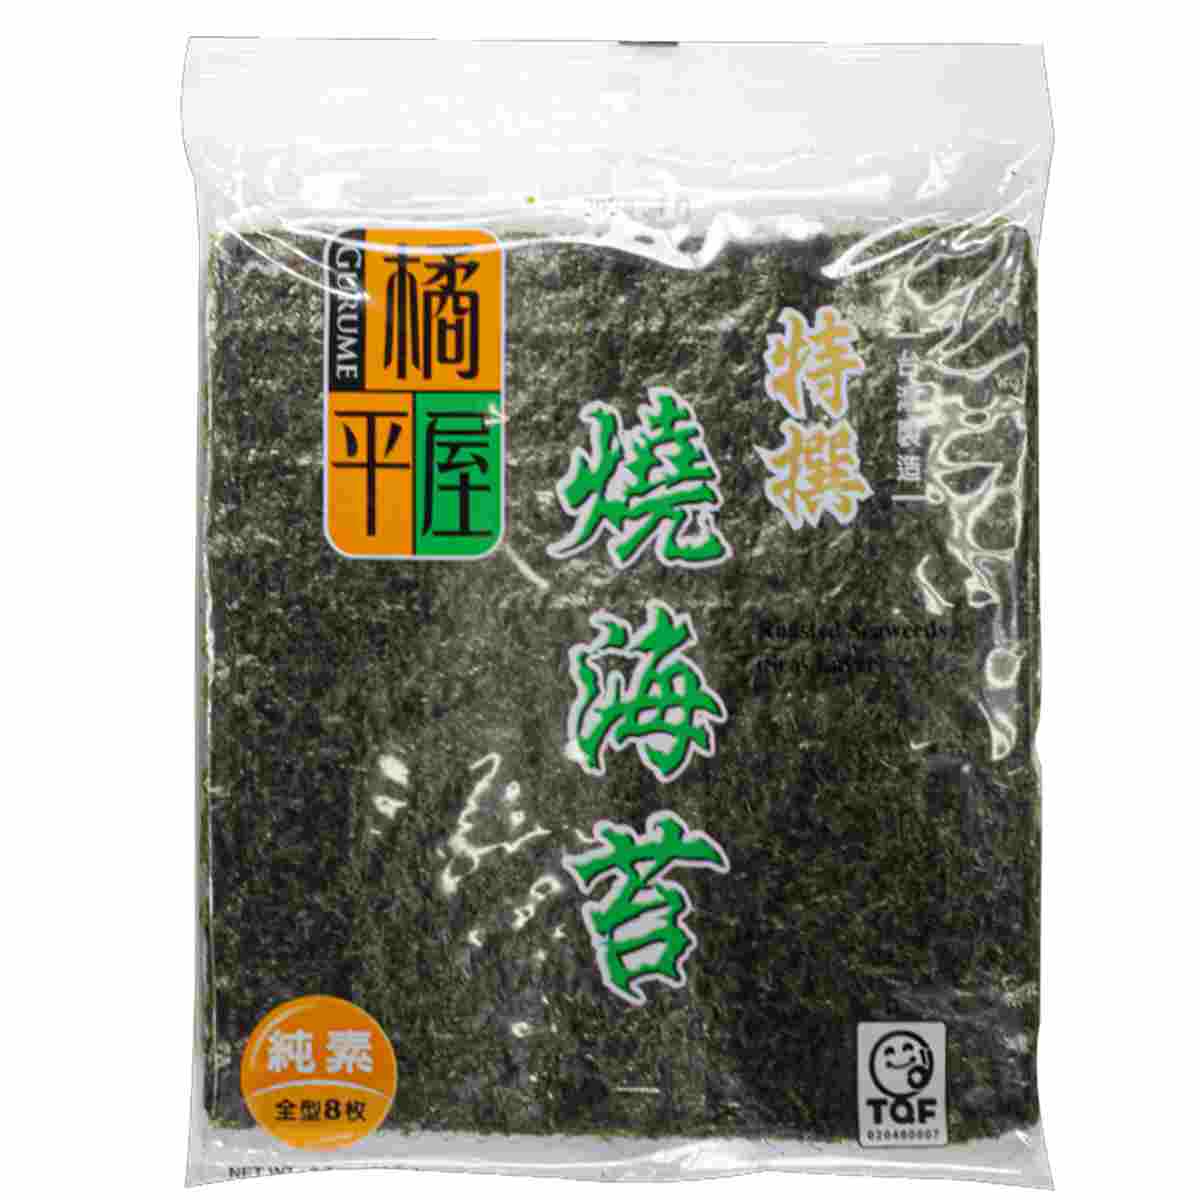 Image Gurume Sushi Seaweed 三味屋 - 特撰烧海苔 (8 pieces) 20.8grams